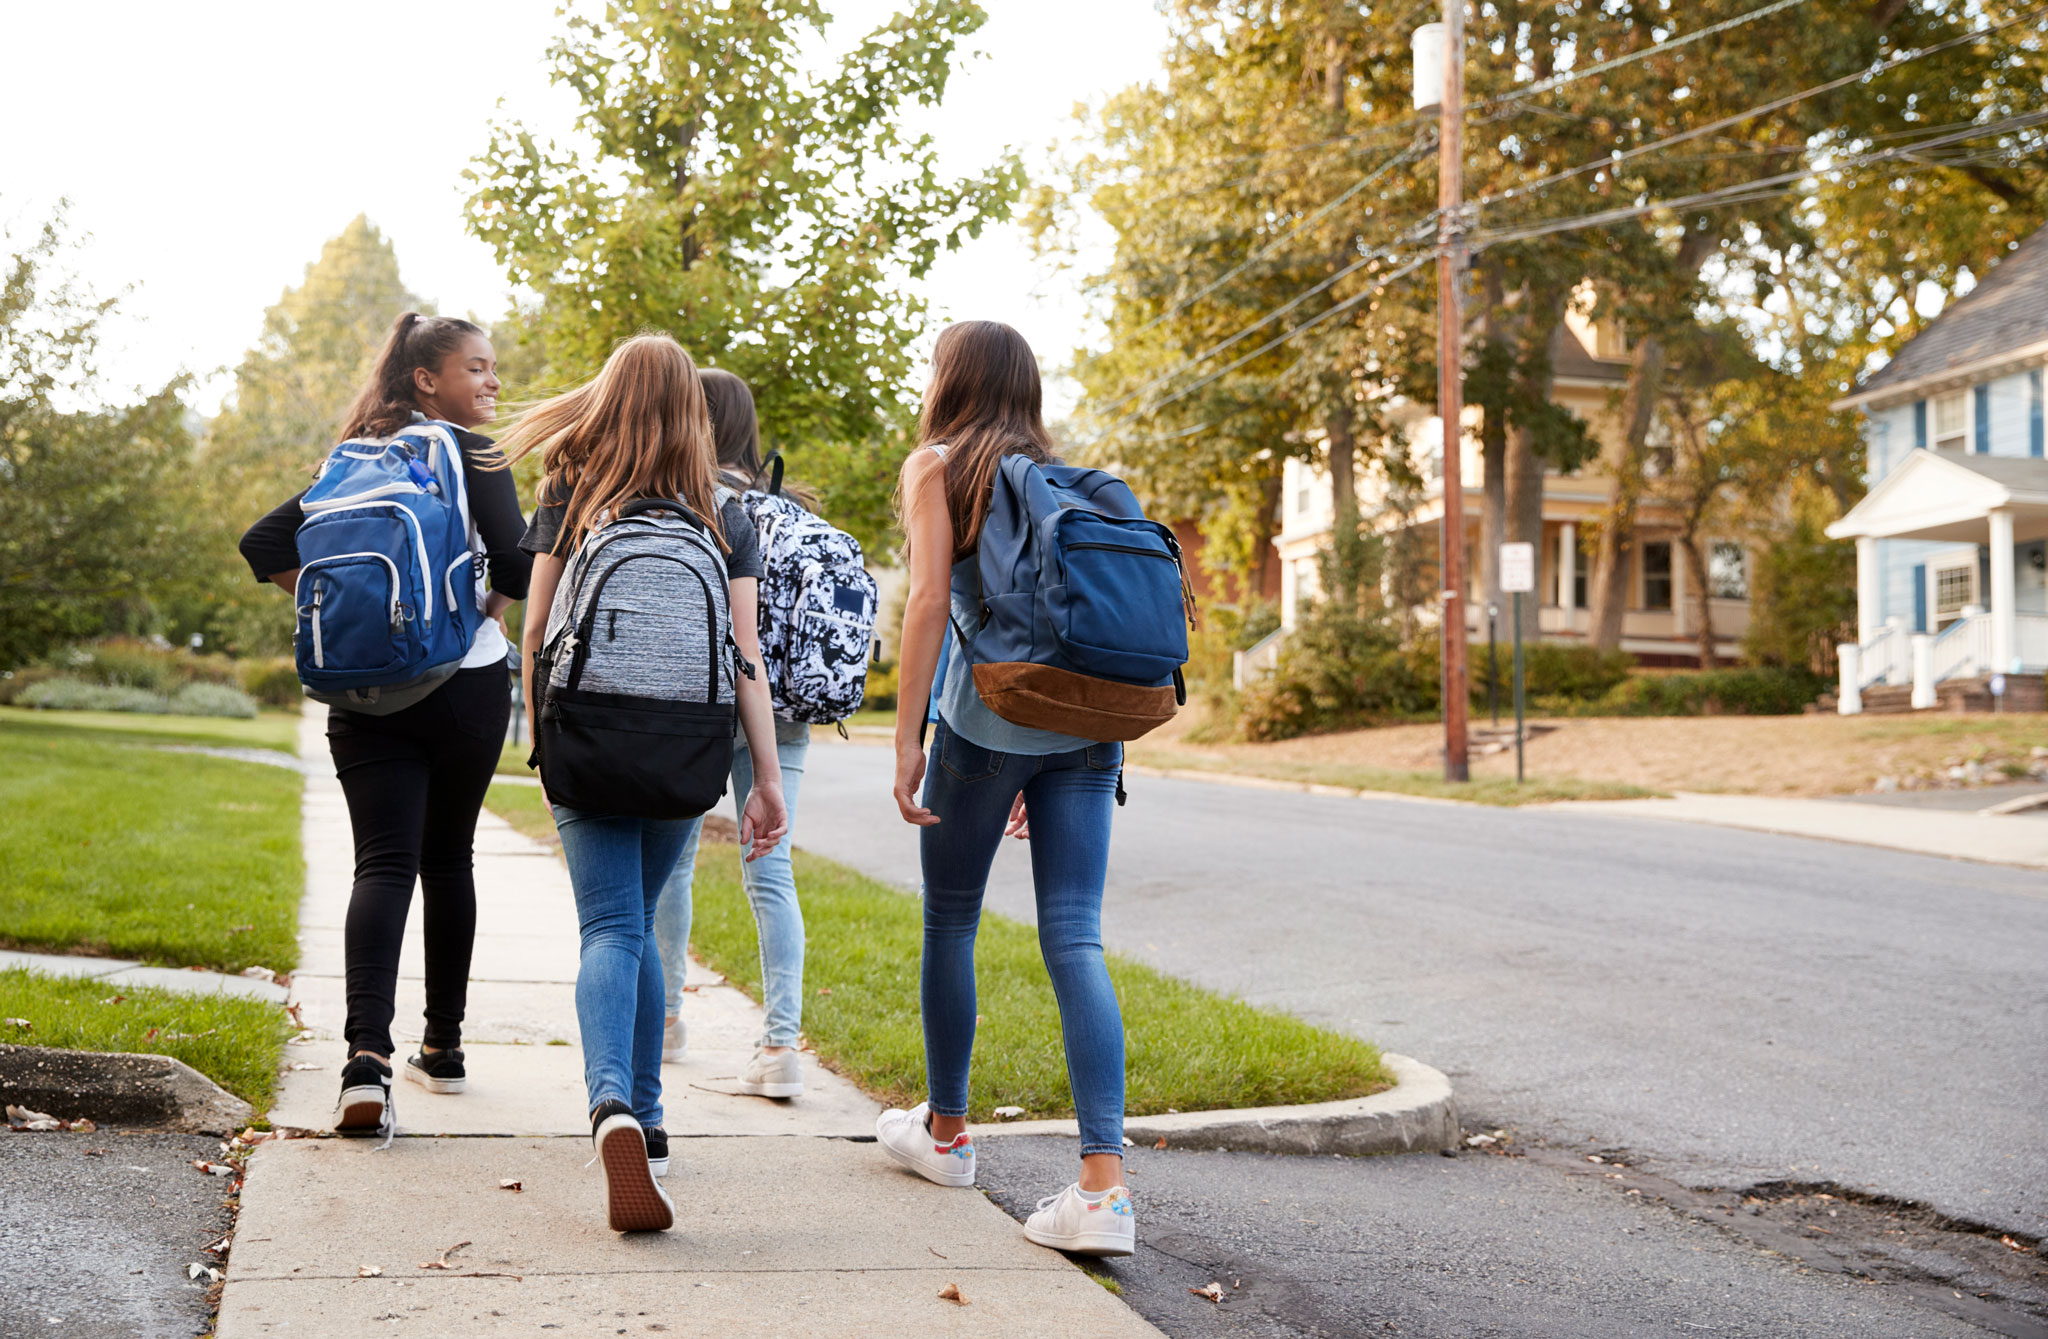 Youth with backpacks walk away on a sidewalk